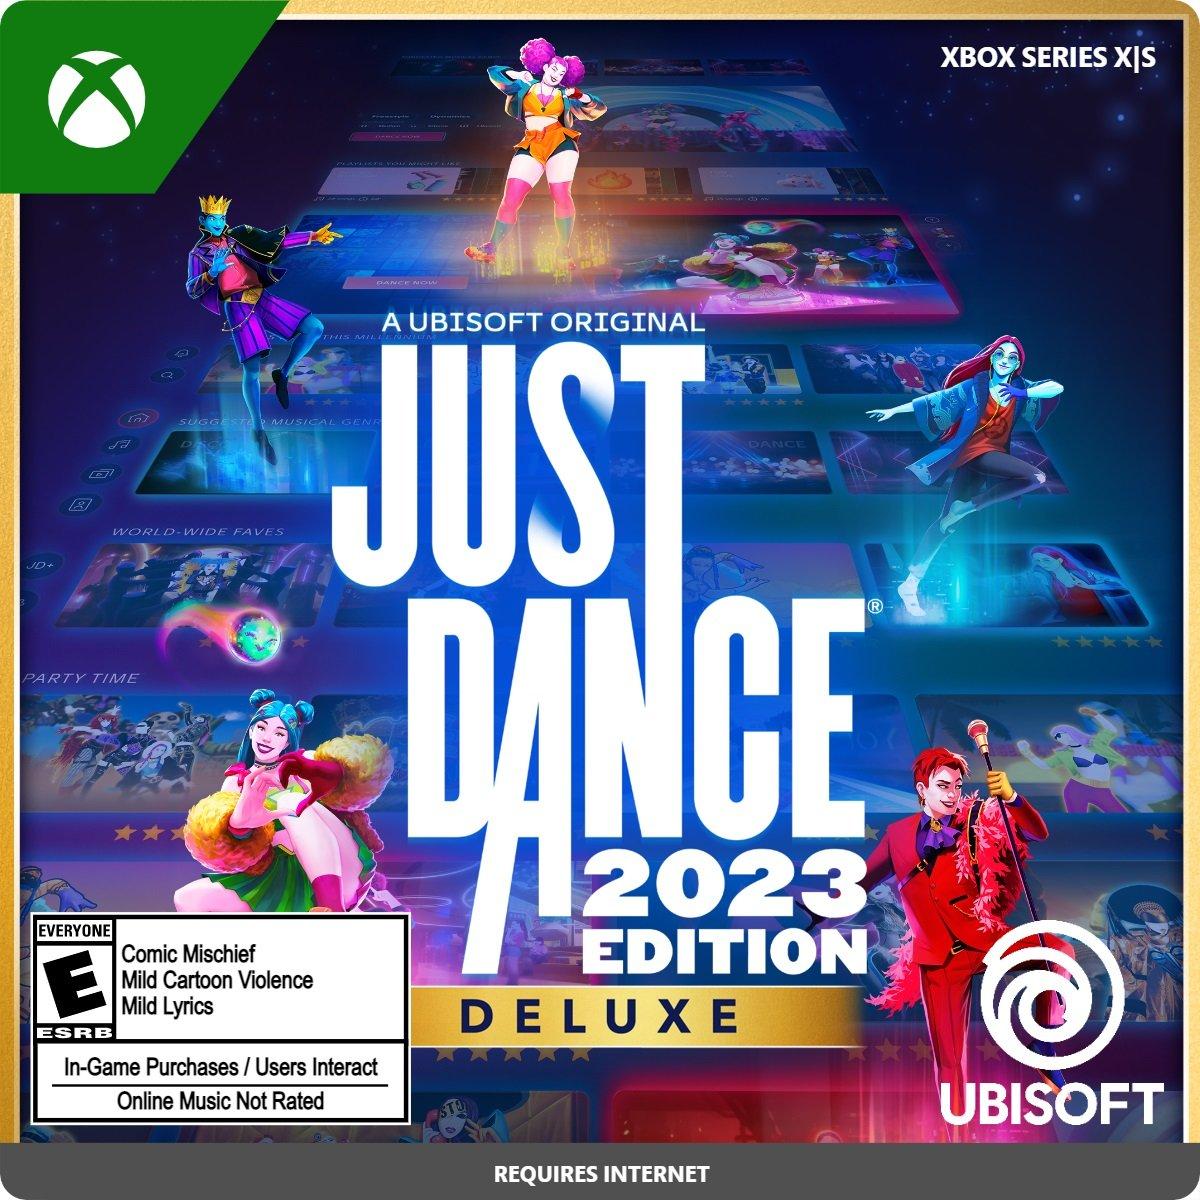 Just Dance Edição 2024: Nintendo Switch™, PlayStation 5, Xbox